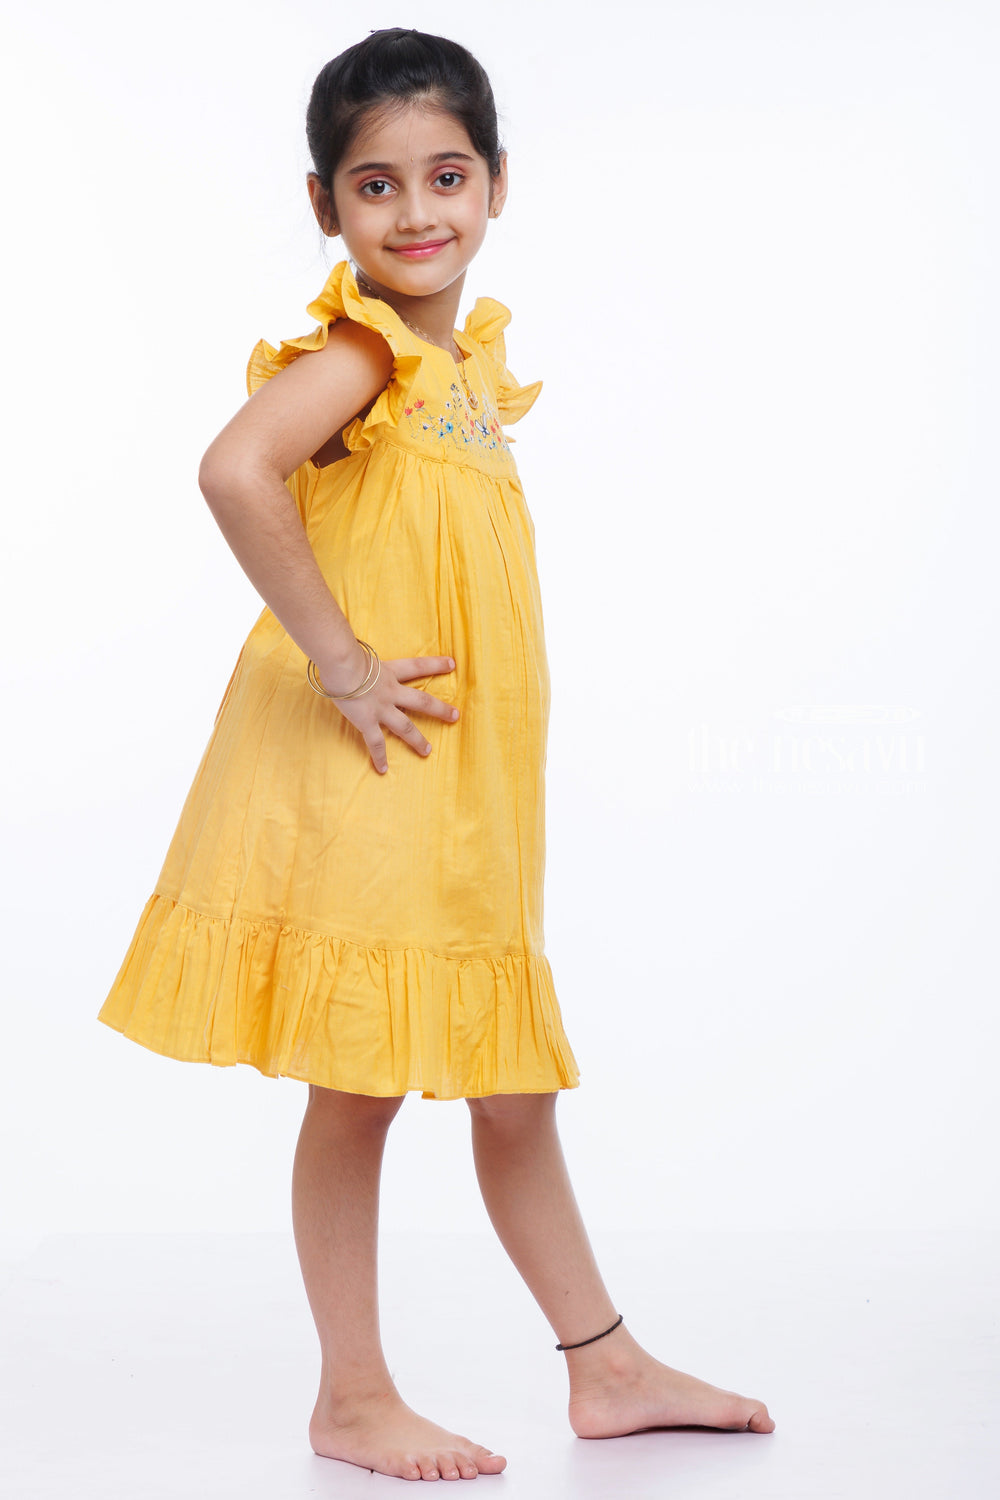 The Nesavu Girls Cotton Frock Girls Mustard Yellow Cotton Dress with Embroidery - A Summer Delight Nesavu Bright Mustard Yellow Embroidered Cotton Dress for Girls | Chic Summer Collection | The Nesavu